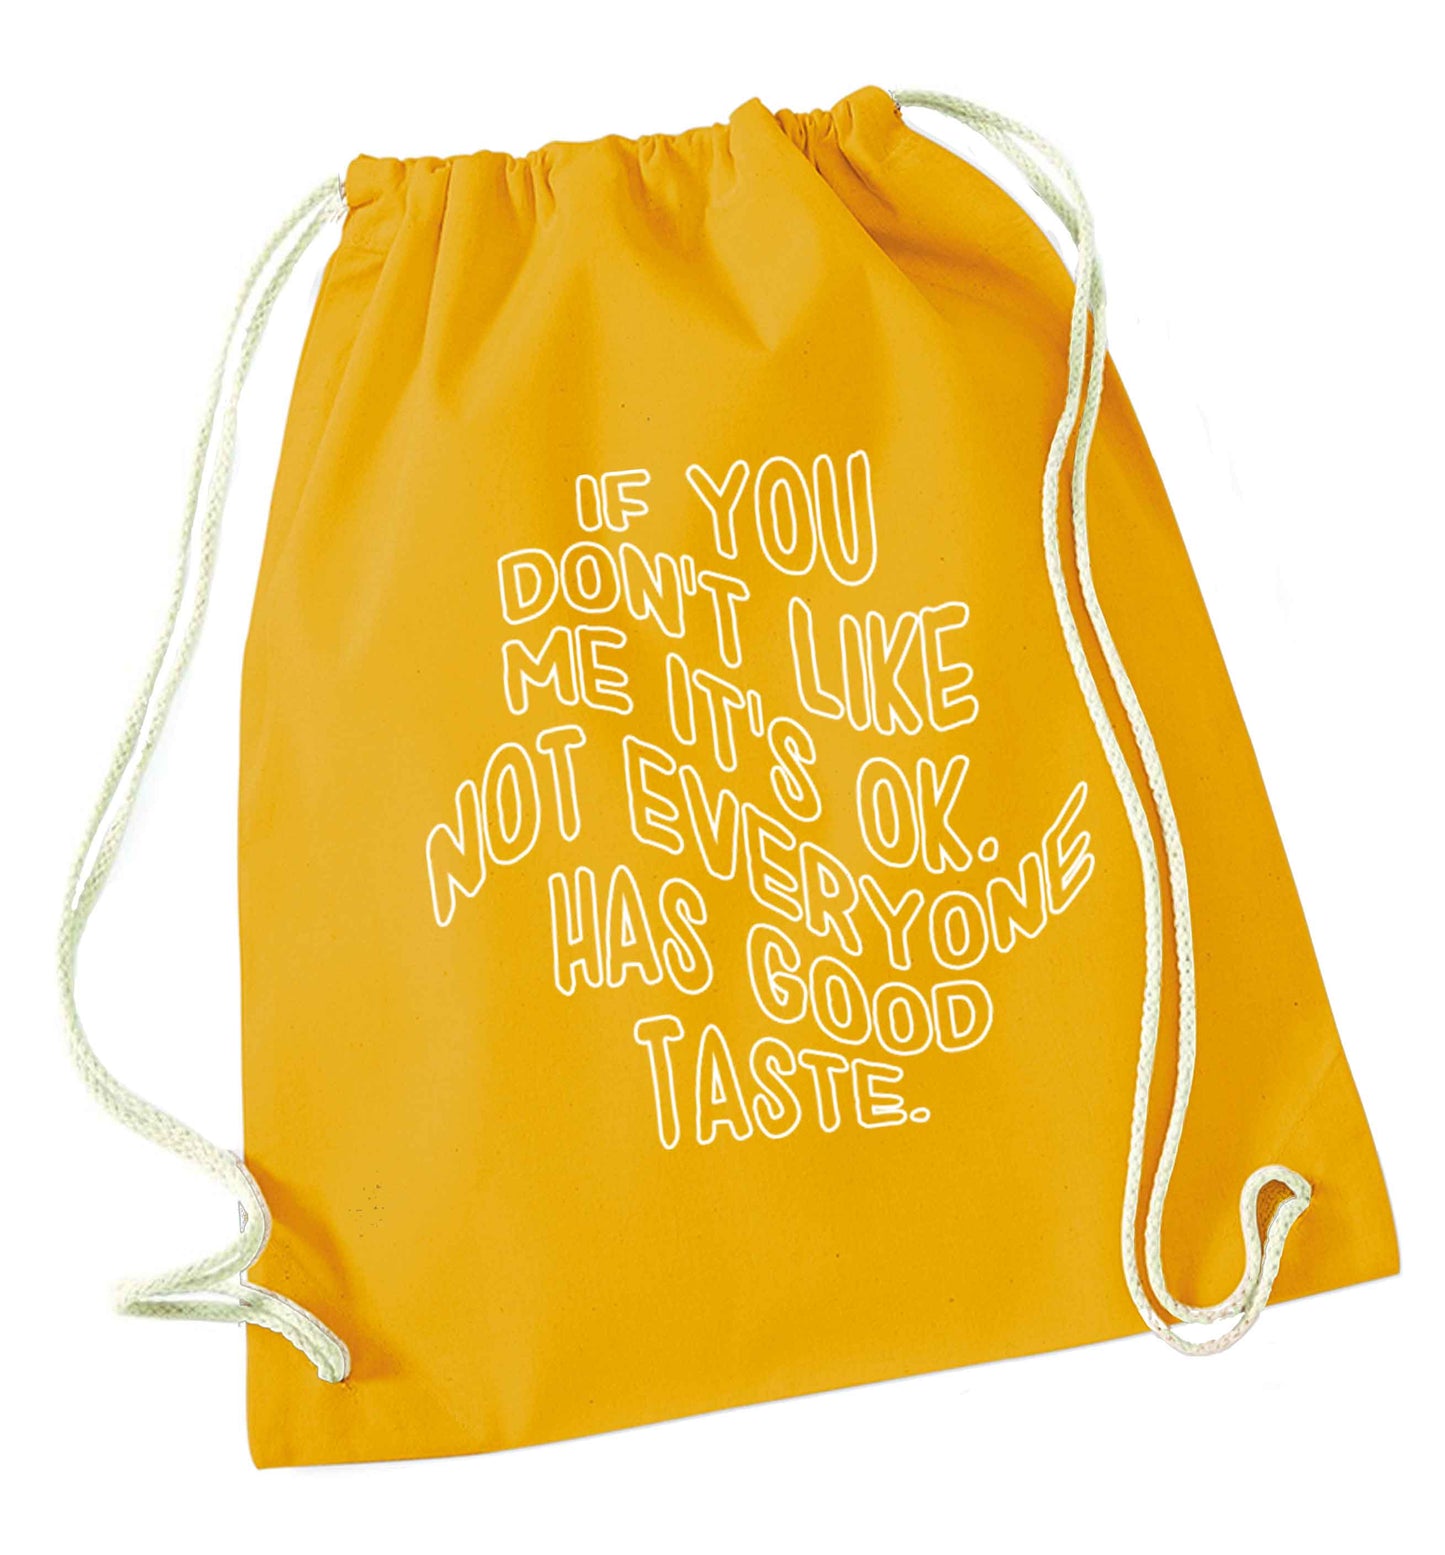 If you don't like me it's ok not everyone has good taste mustard drawstring bag